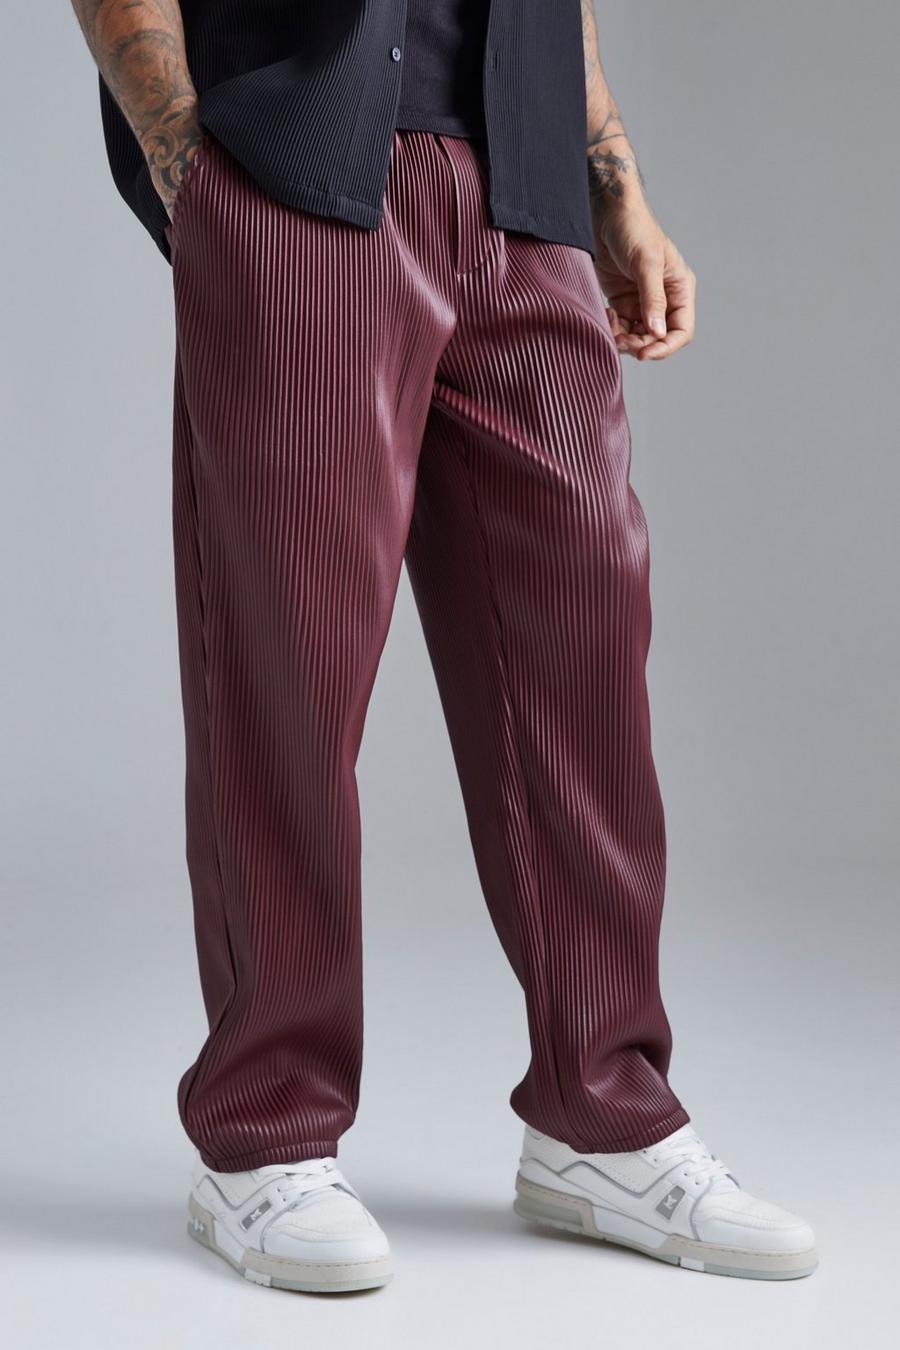 Pantalón recto de cuero sintético con cintura elástica, Burgundy